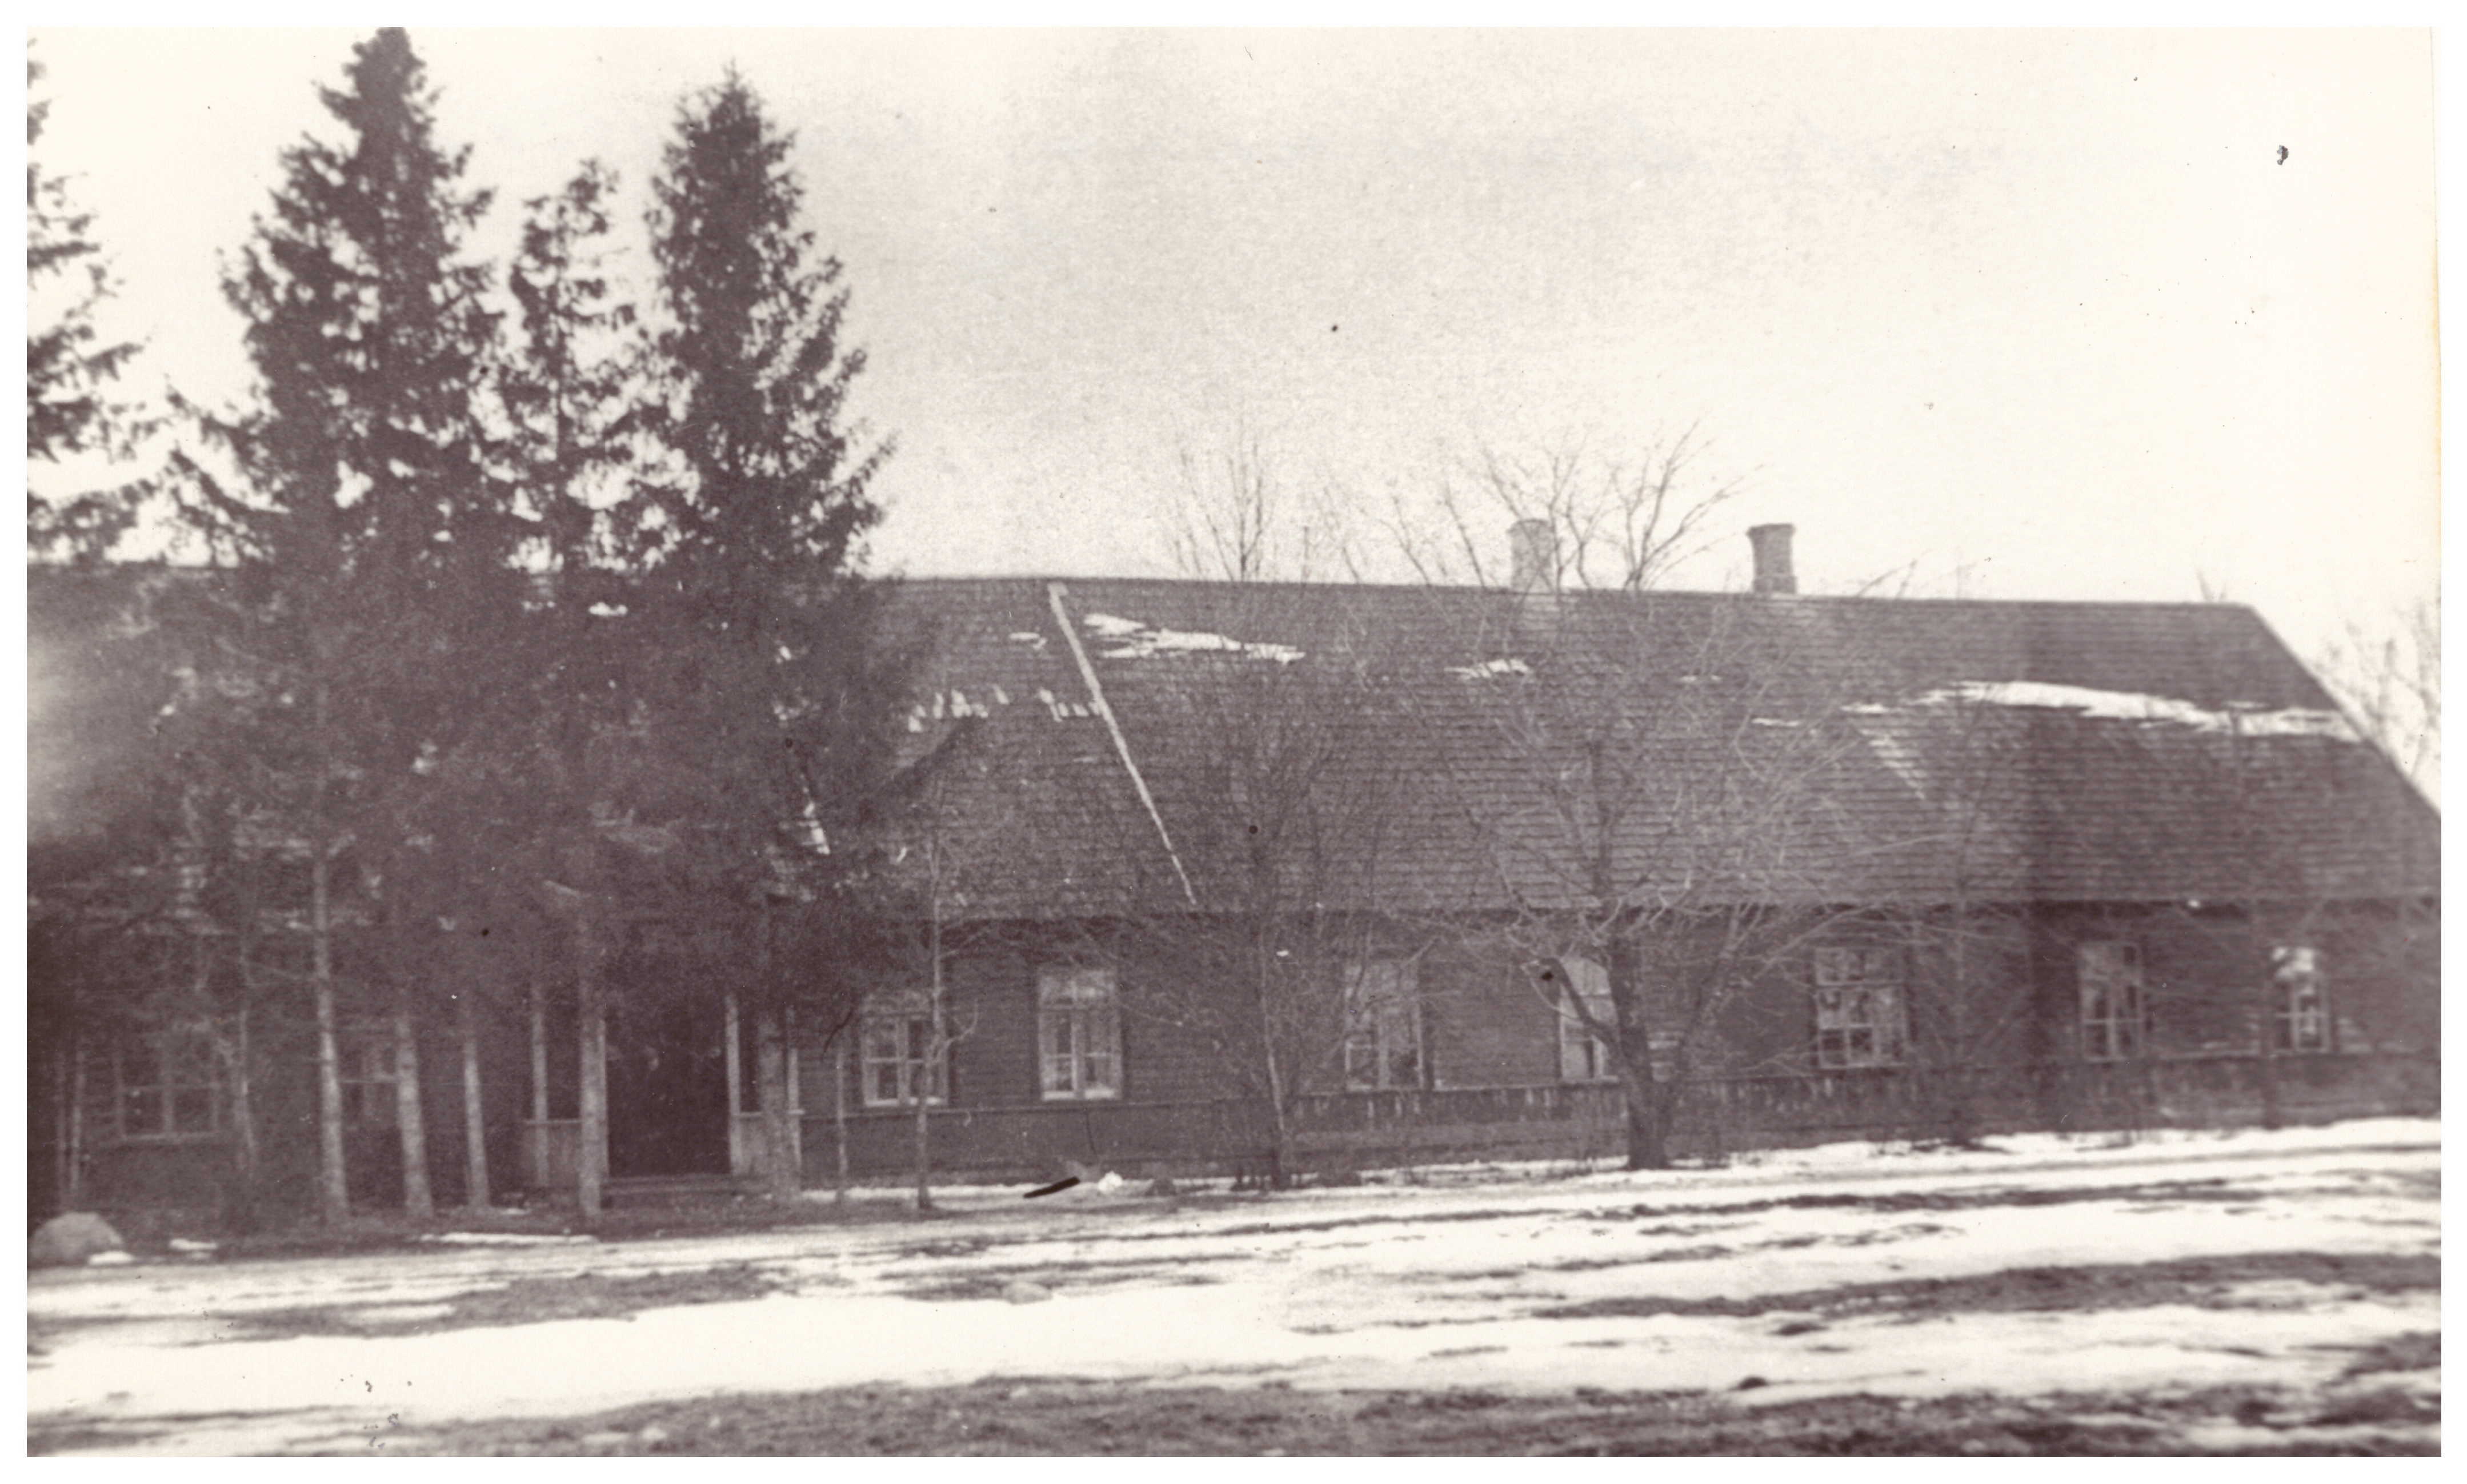 Movement School House in 1920s.